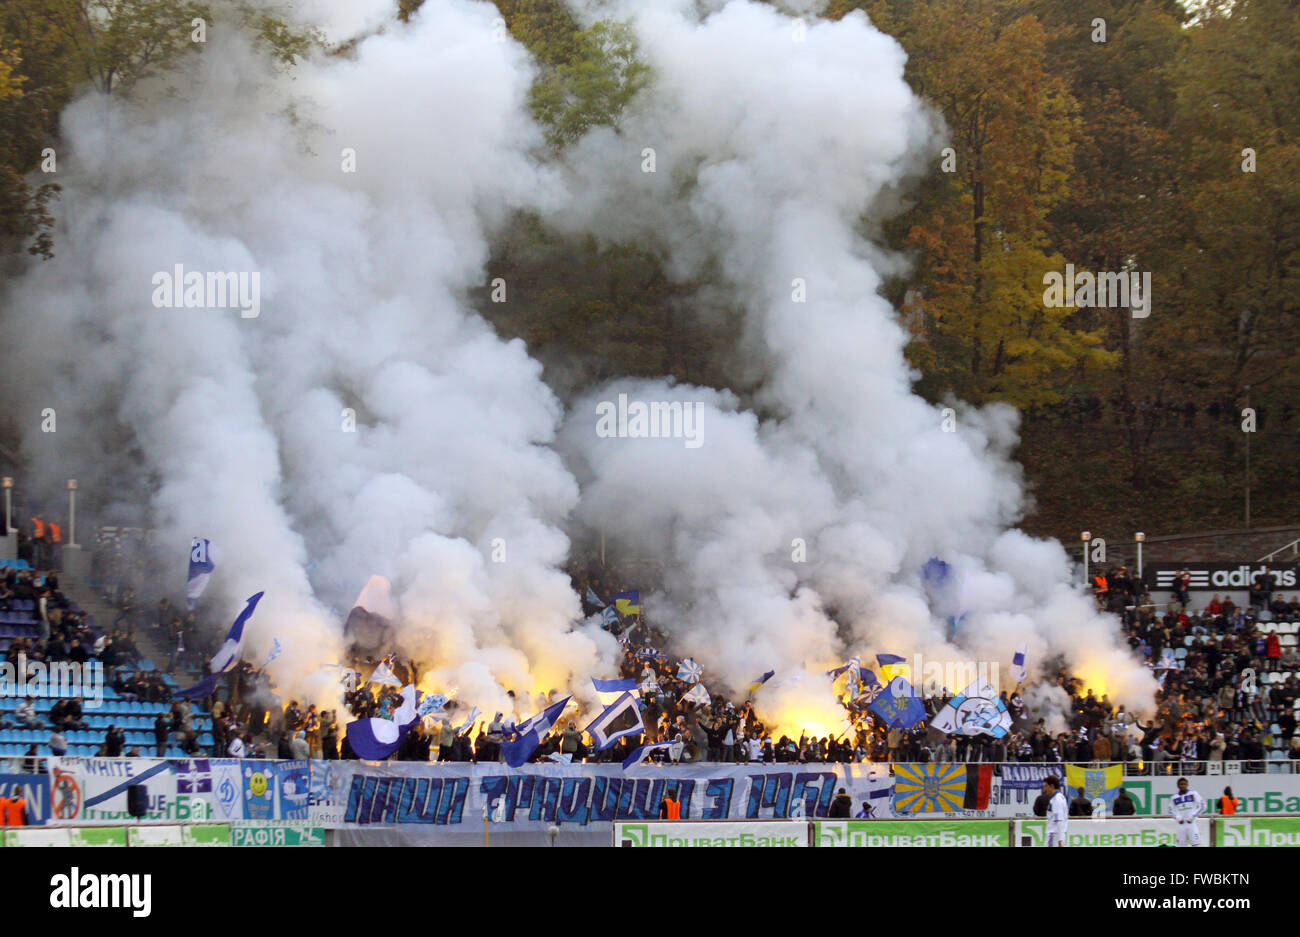 Kiew, UKRAINE - 16. Oktober 2010: FC Dynamo Kyiv Ultras (ultra Anhänger) brennen Fackeln während Ukraine Meisterschaftsspiel gegen Stockfoto